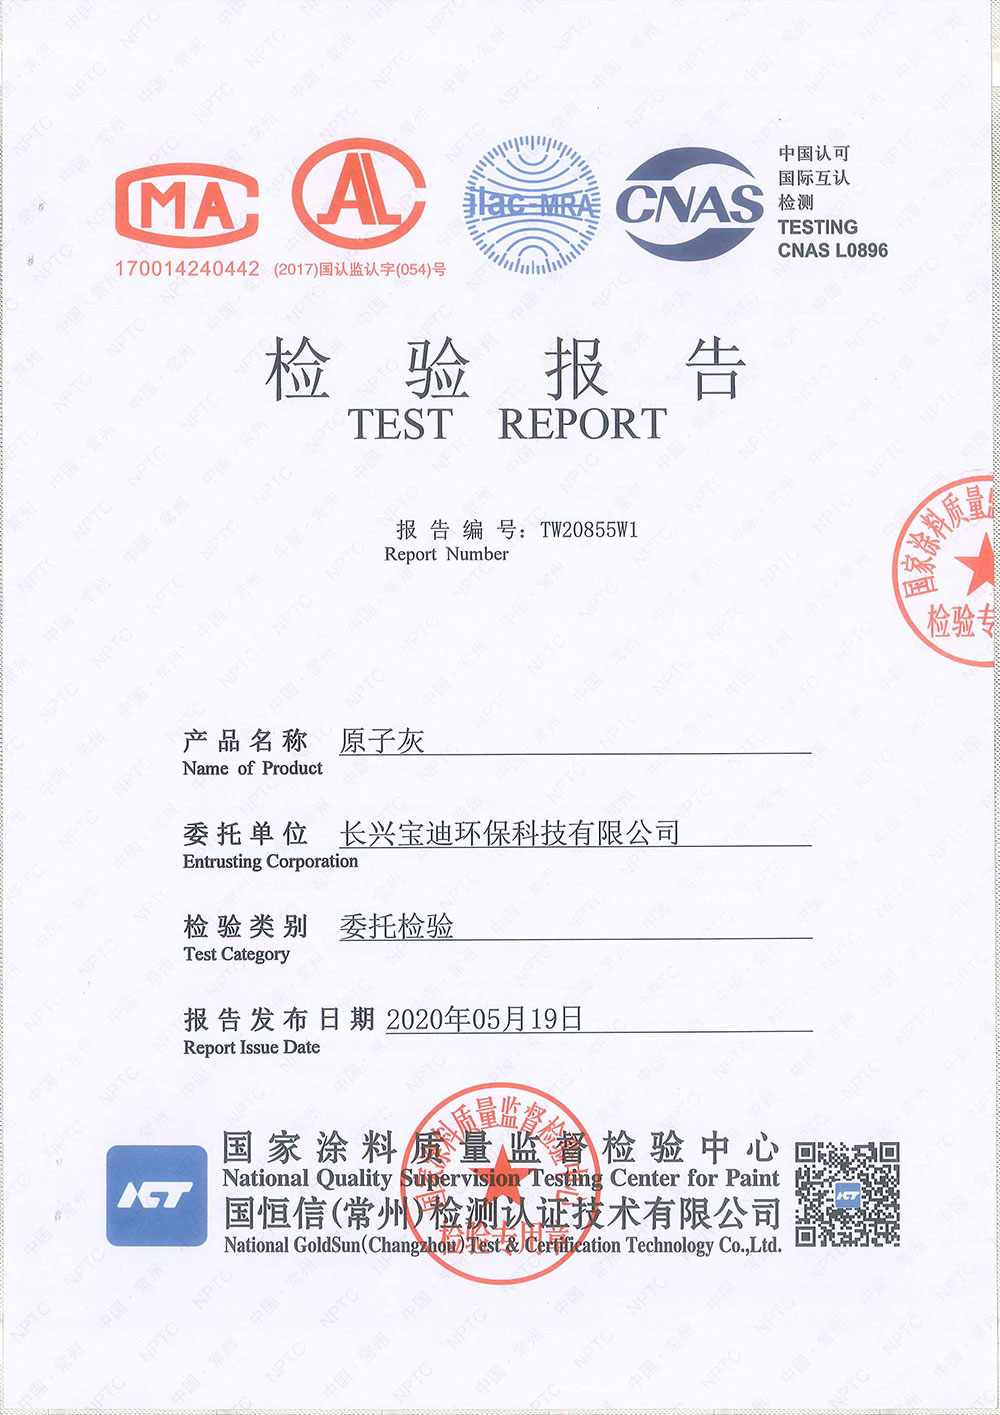 TEST REPORT